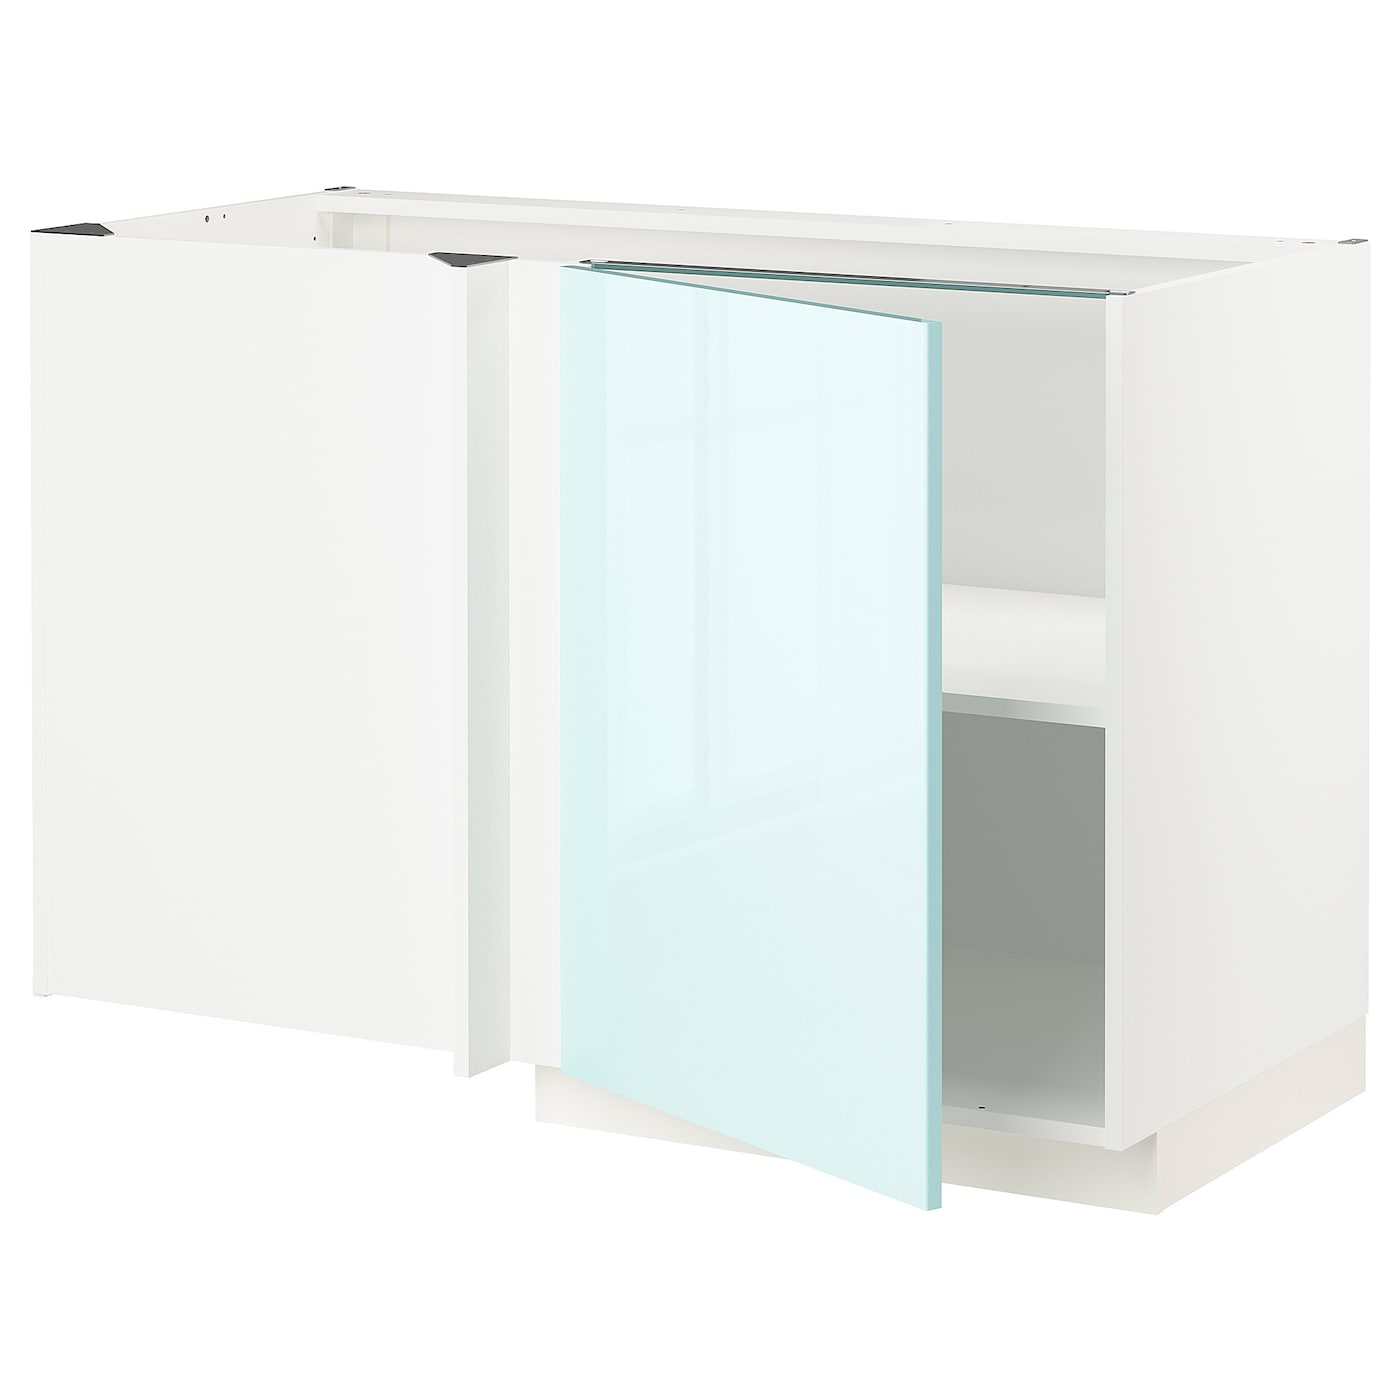 Угловой шкаф-тумба с полкой - IKEA METOD/МЕТОД ИКЕА, 128х68 см, белый/голубой глянцевый